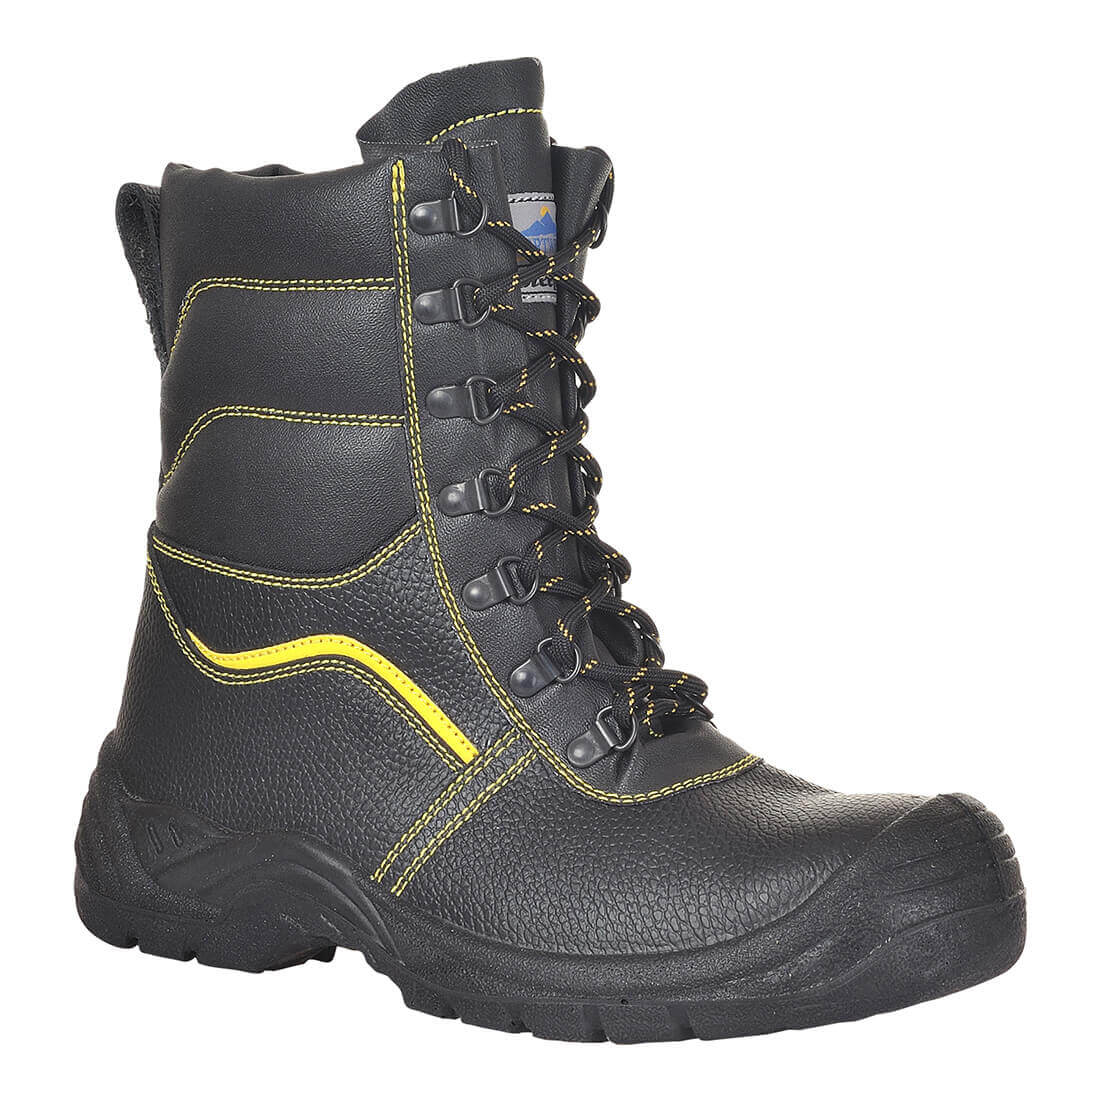 Portwest Steelite Protector Fur Lined High Leg Safety Boots Black Size 5